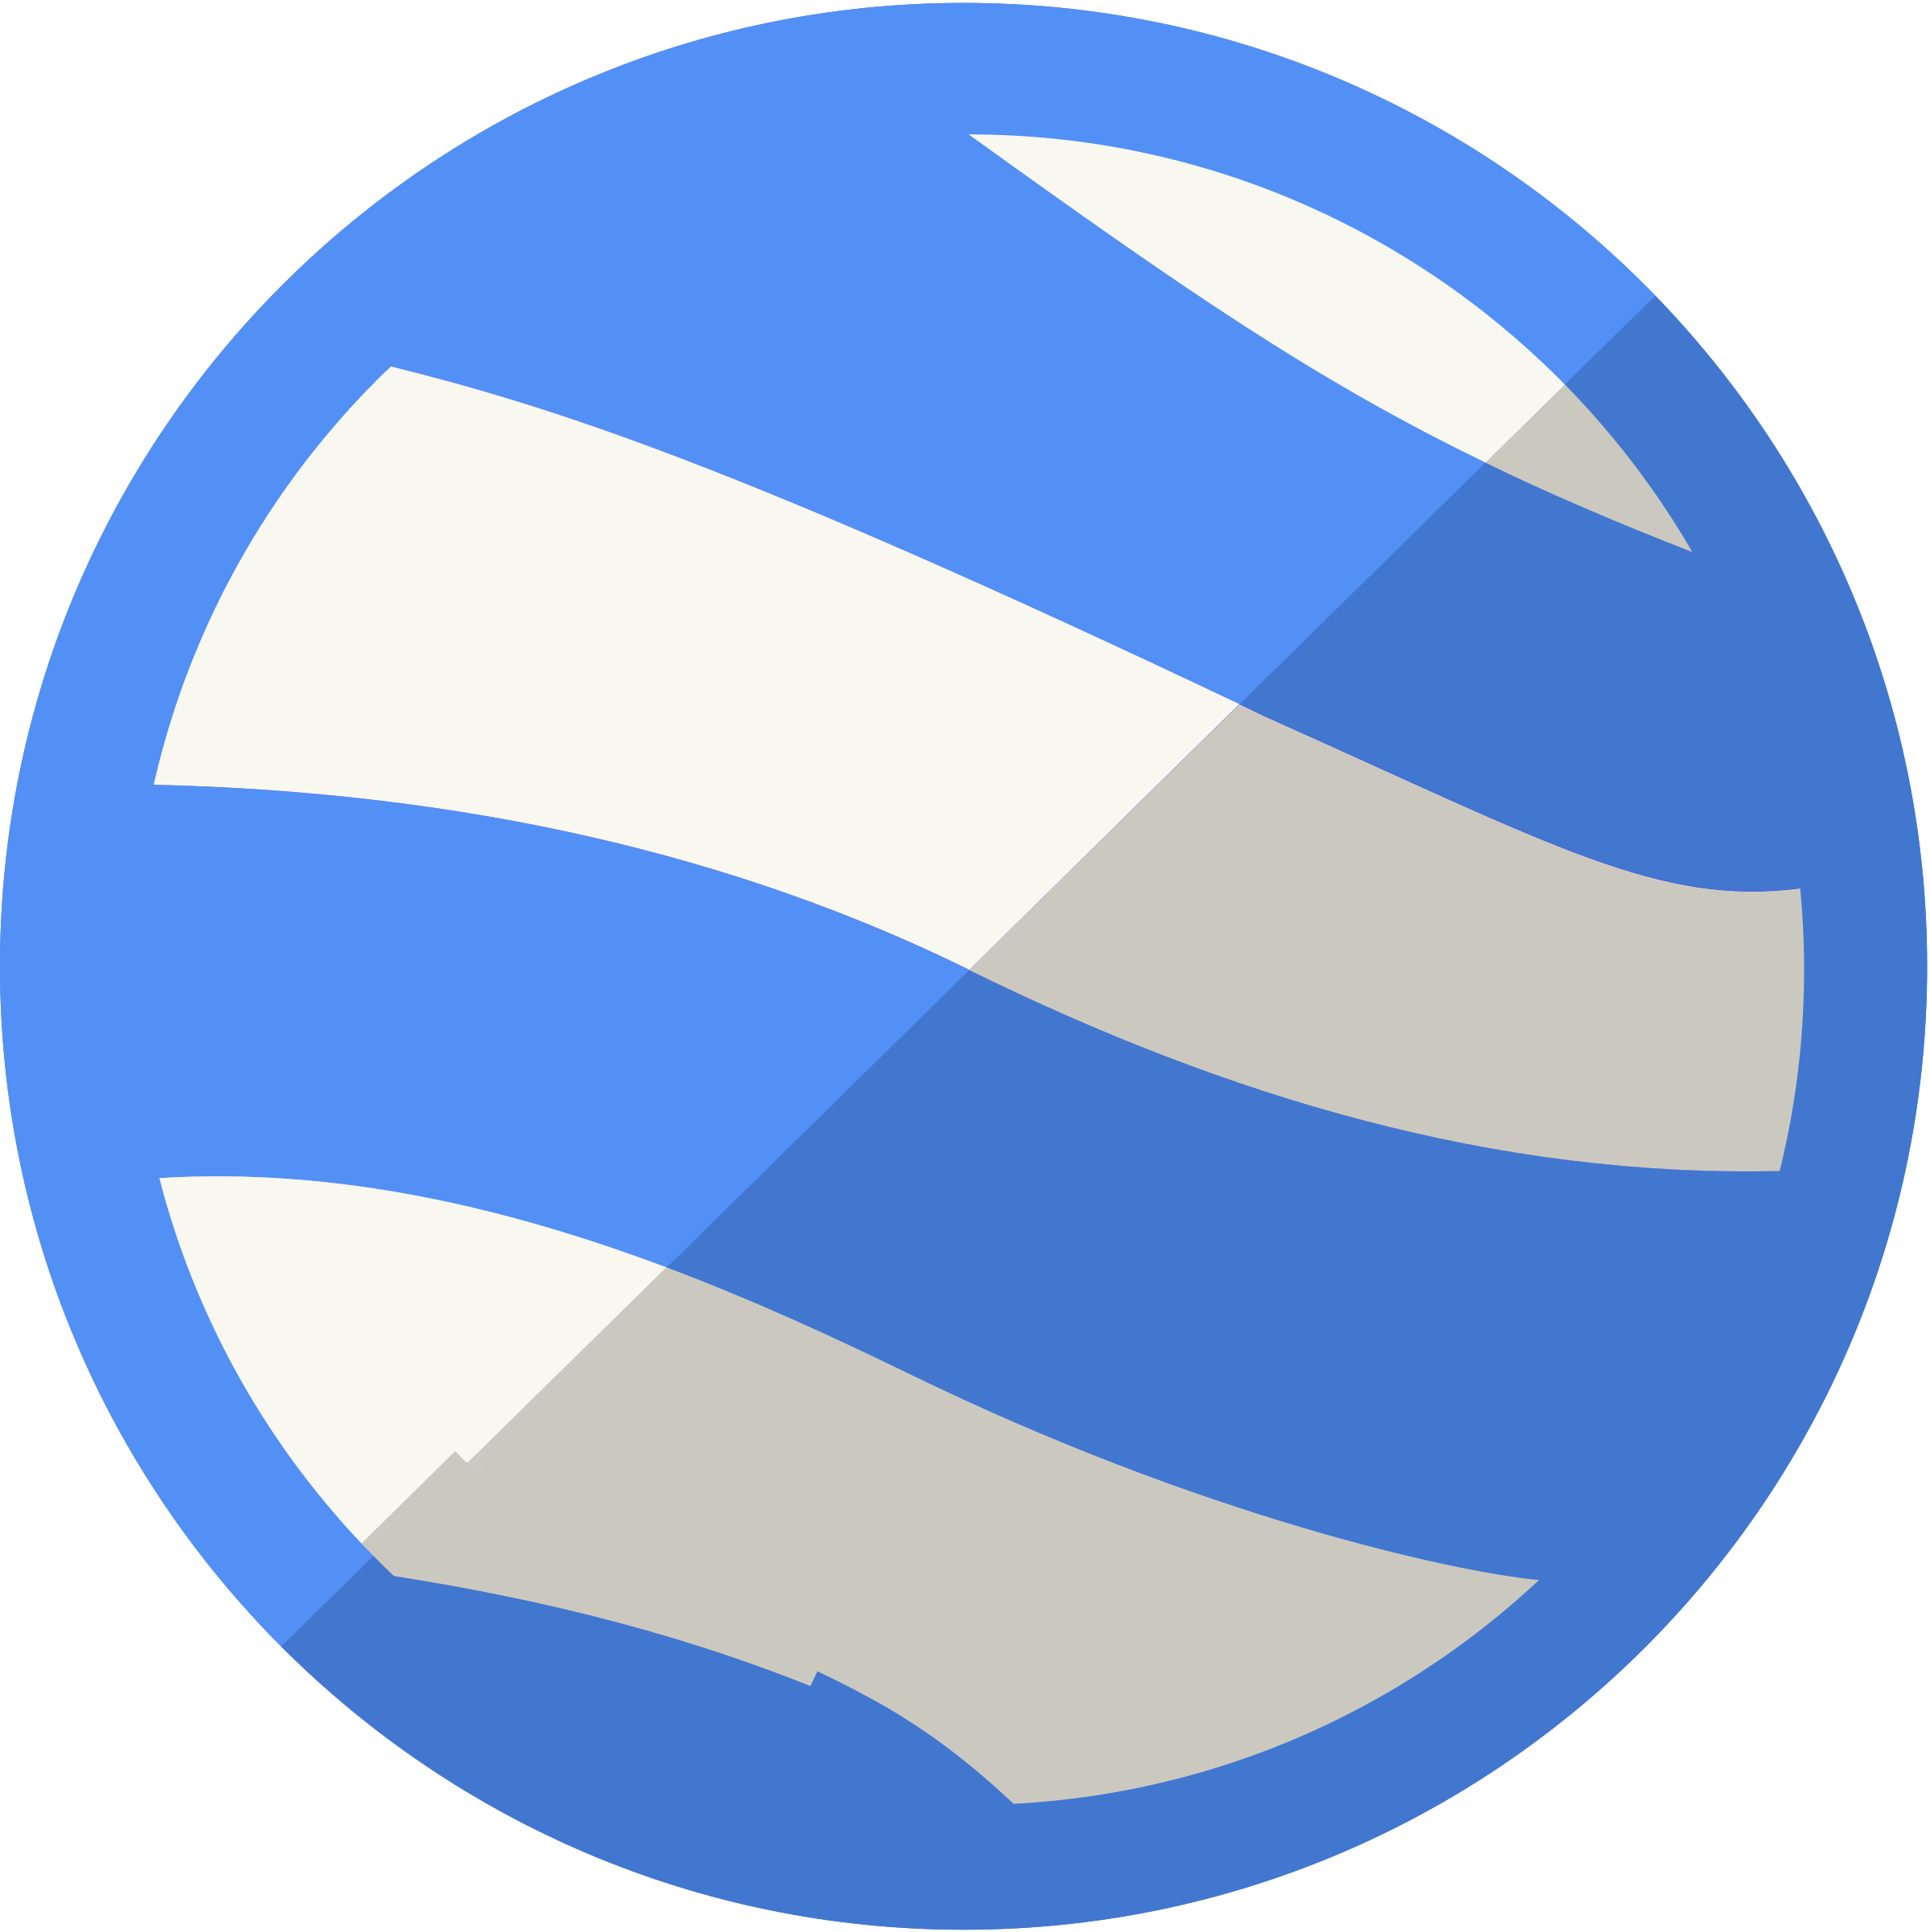 www Google Earth Logo - Google Earth Logo PNG Transparent & SVG Vector - Freebie Supply